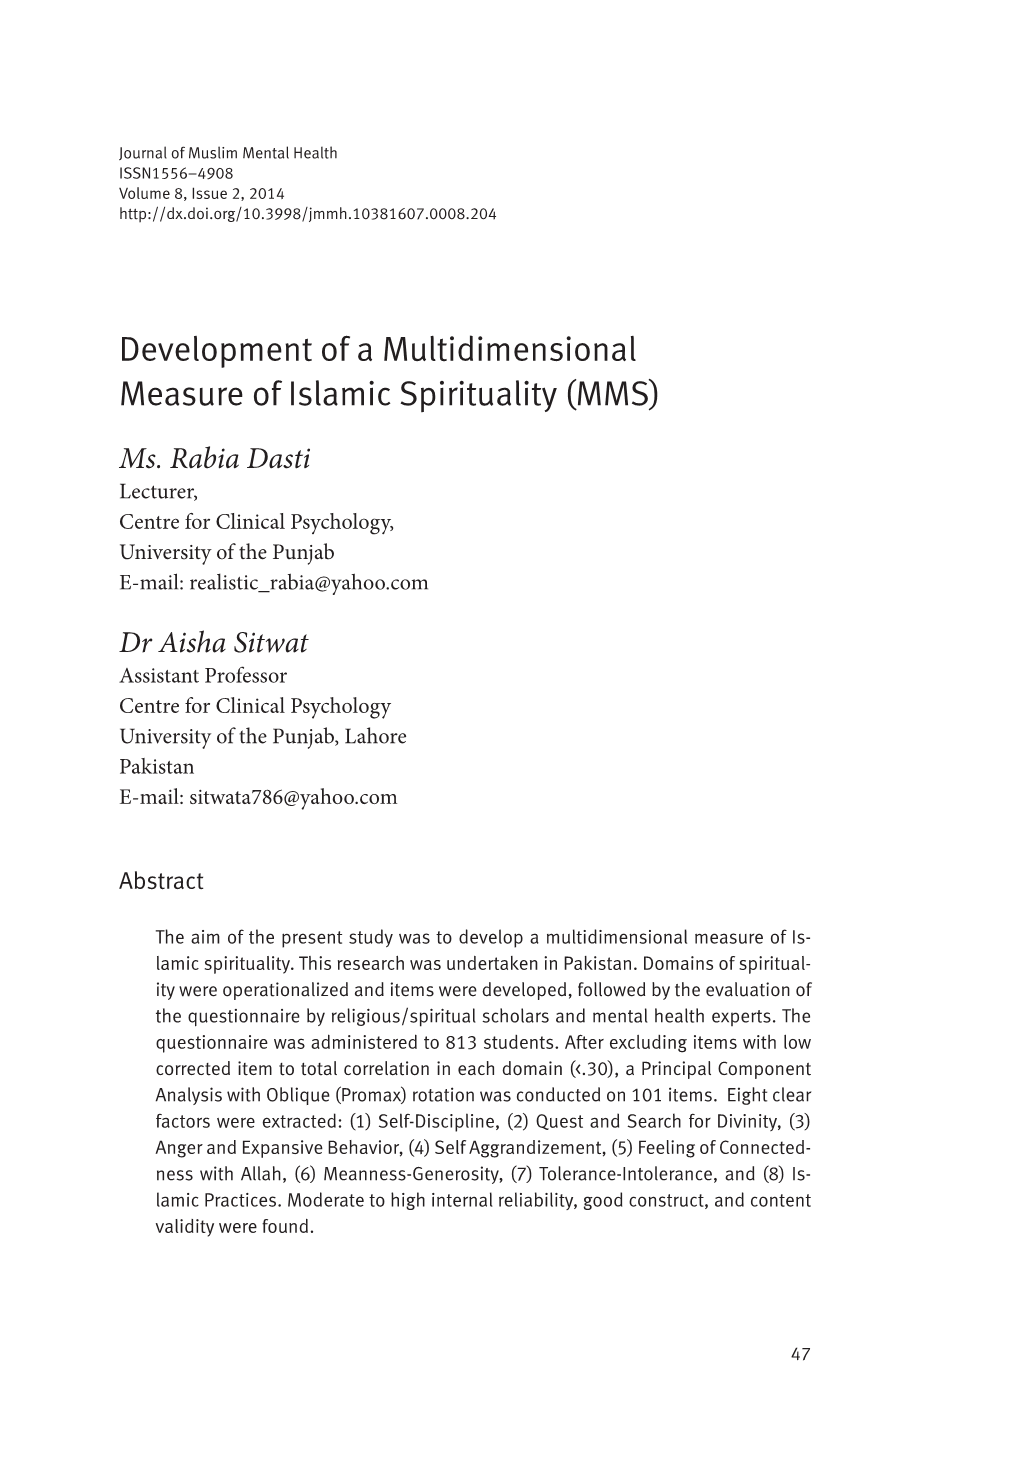 Development of a Multidimensional Measure of Islamic Spirituality (MMS)